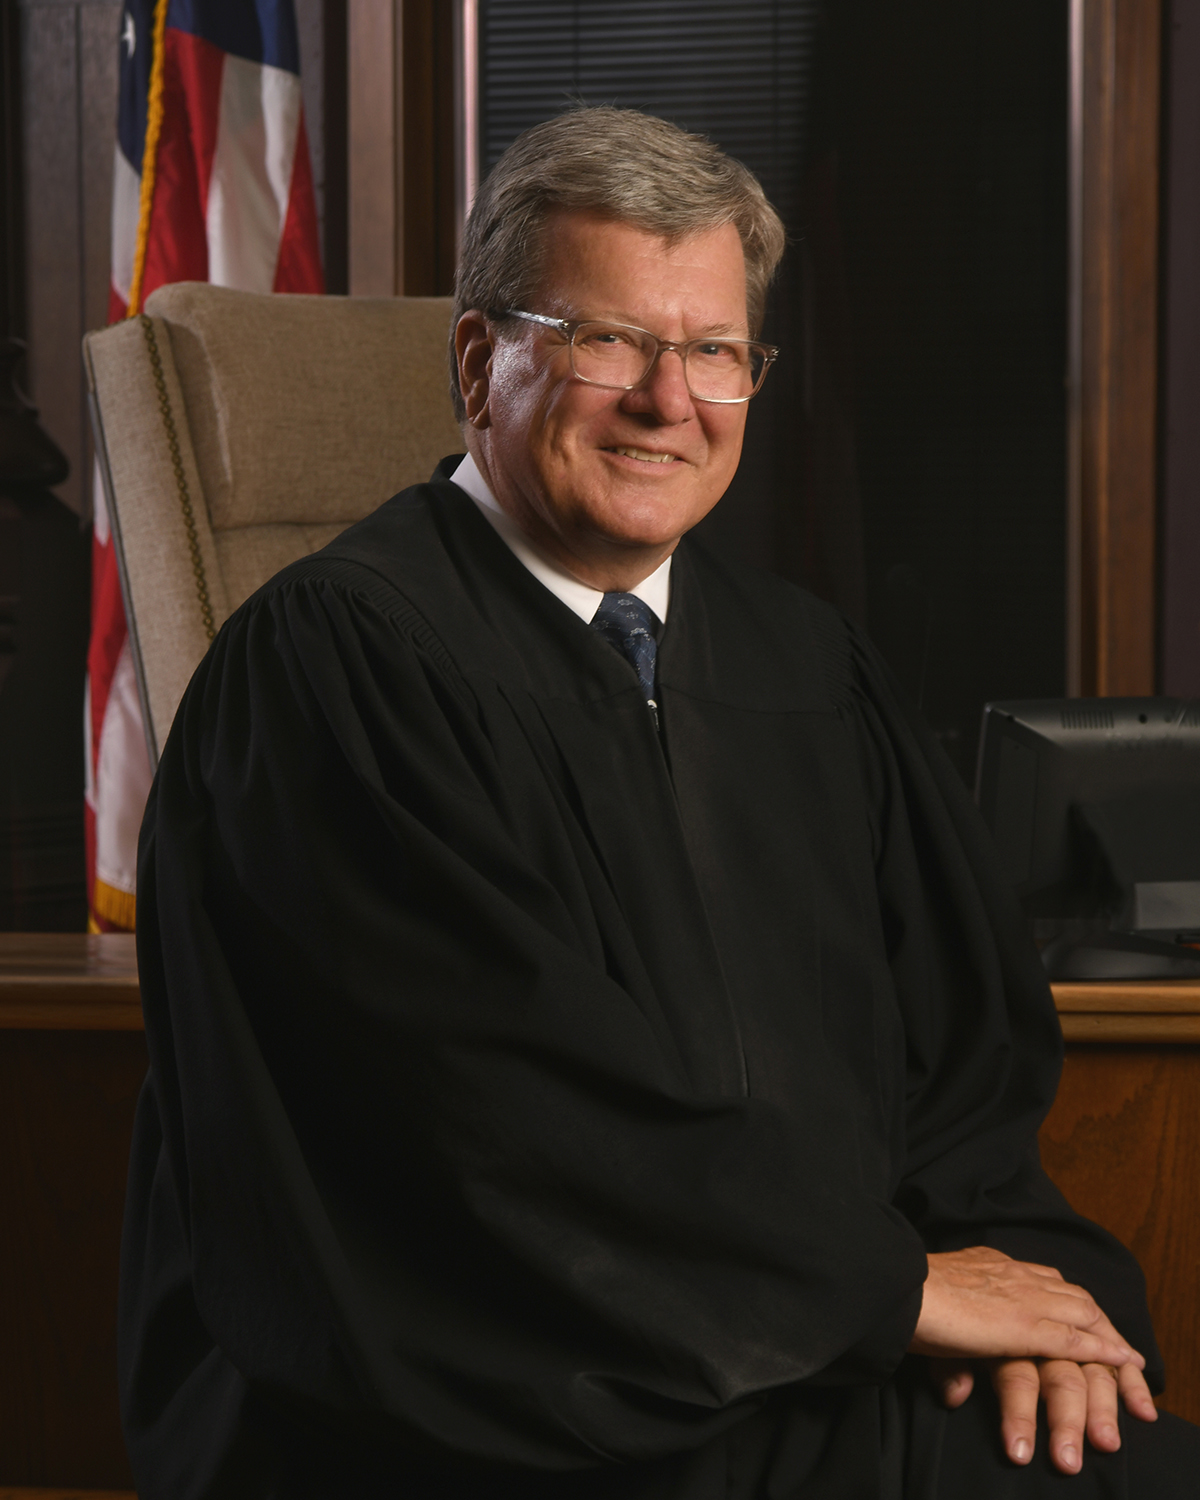 judge prokes